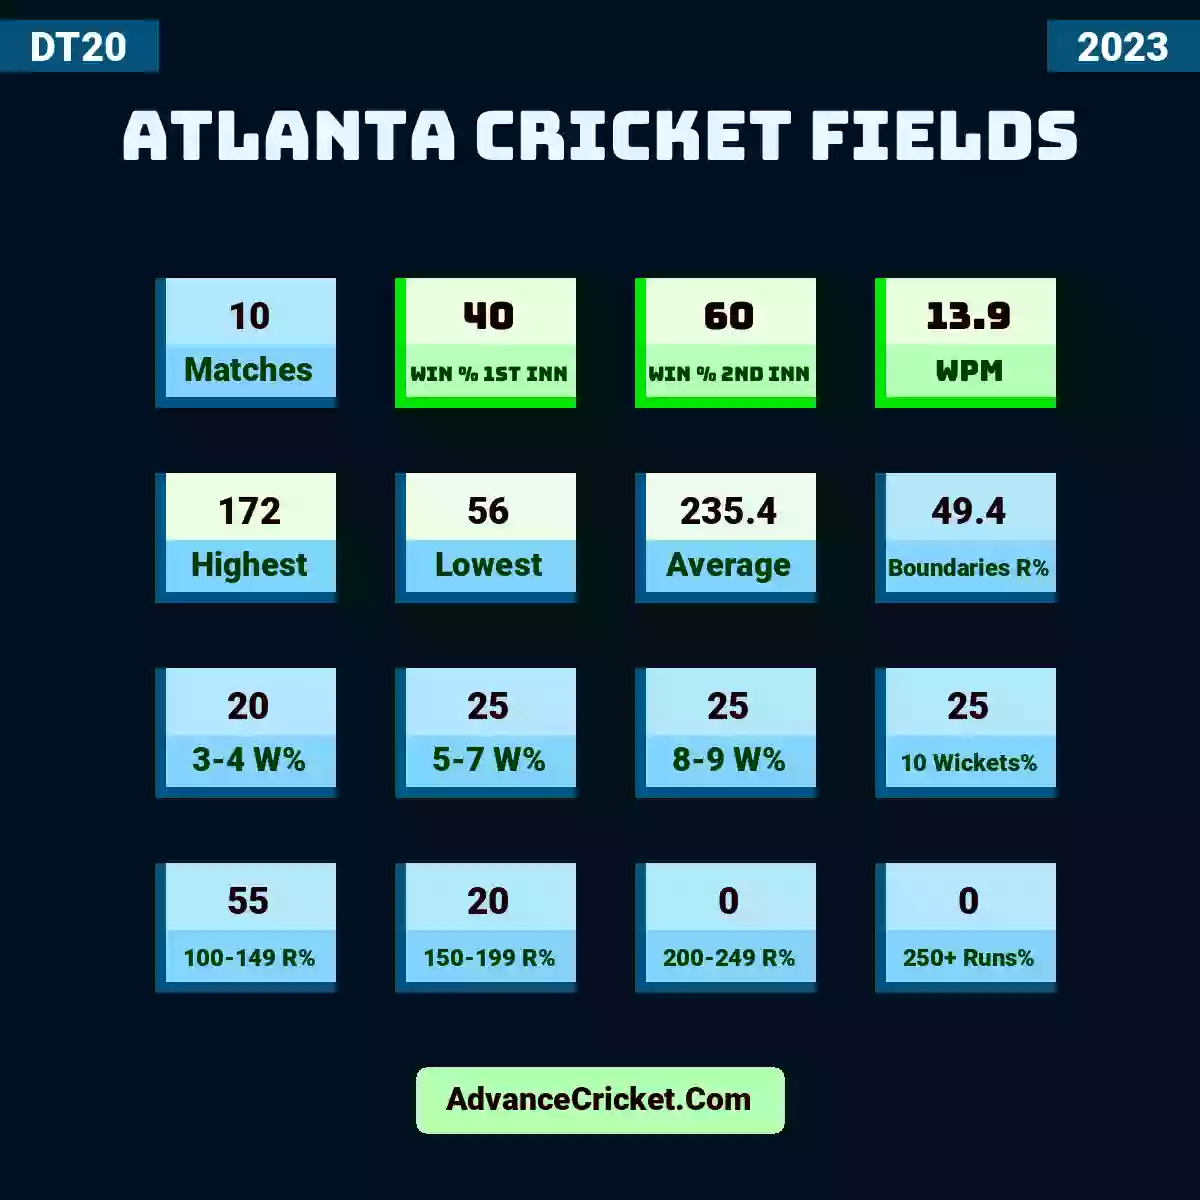 Image showing Atlanta Cricket Fields with Matches: 10, Win % 1st Inn: 40, Win % 2nd Inn: 60, WPM: 13.9, Highest: 172, Lowest: 56, Average: 235.4, Boundaries R%: 49.4, 3-4 W%: 20, 5-7 W%: 25, 8-9 W%: 25, 10 Wickets%: 25, 100-149 R%: 55, 150-199 R%: 20, 200-249 R%: 0, 250+ Runs%: 0.